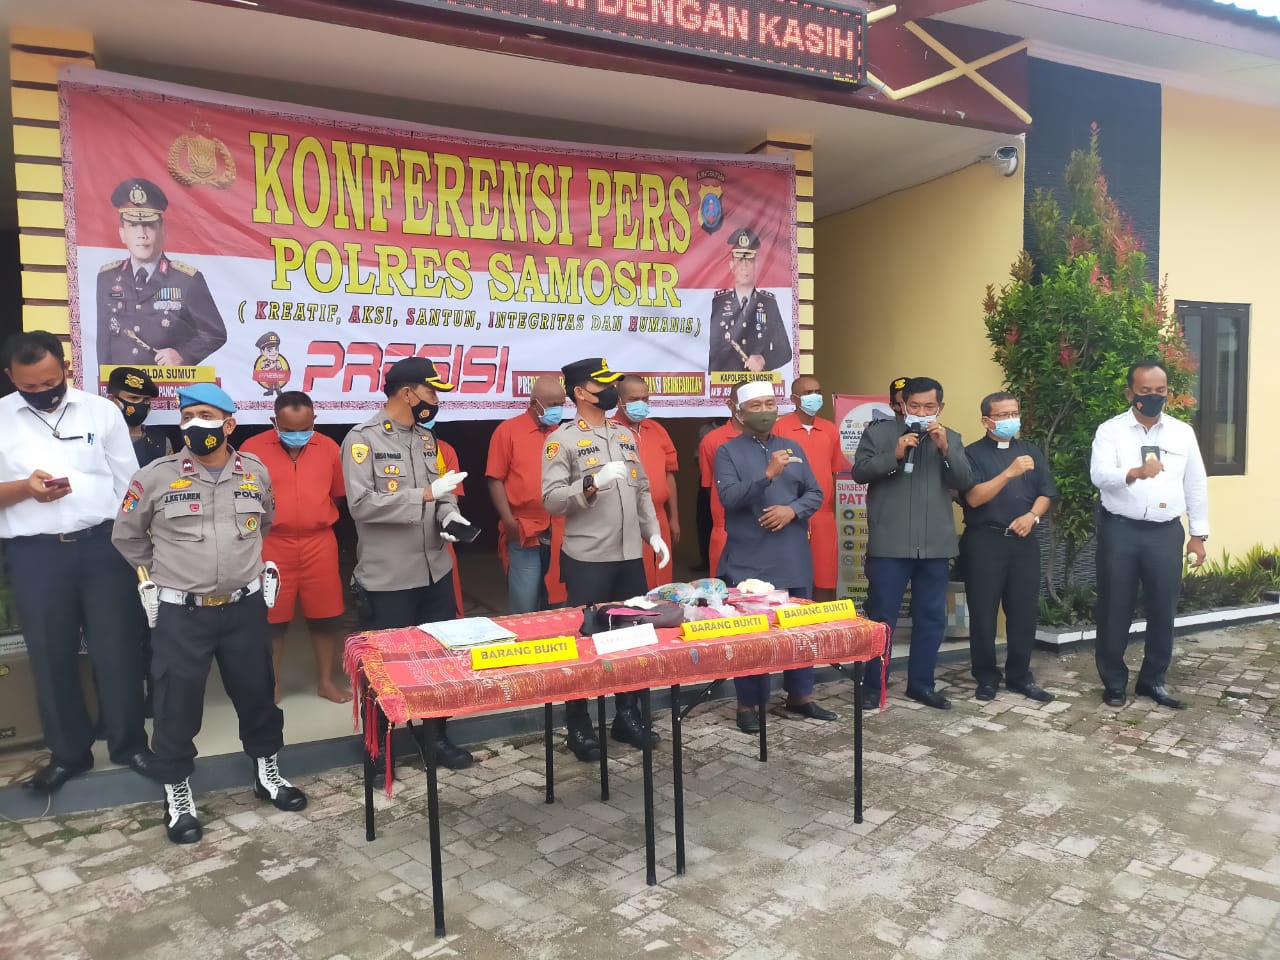 Polres Samosir Polda Sumatera Utara merilis pengungkapan tiga kasus tindak pidana kejahatan. (Foto: PMJ News/ Nia Polri TV). 